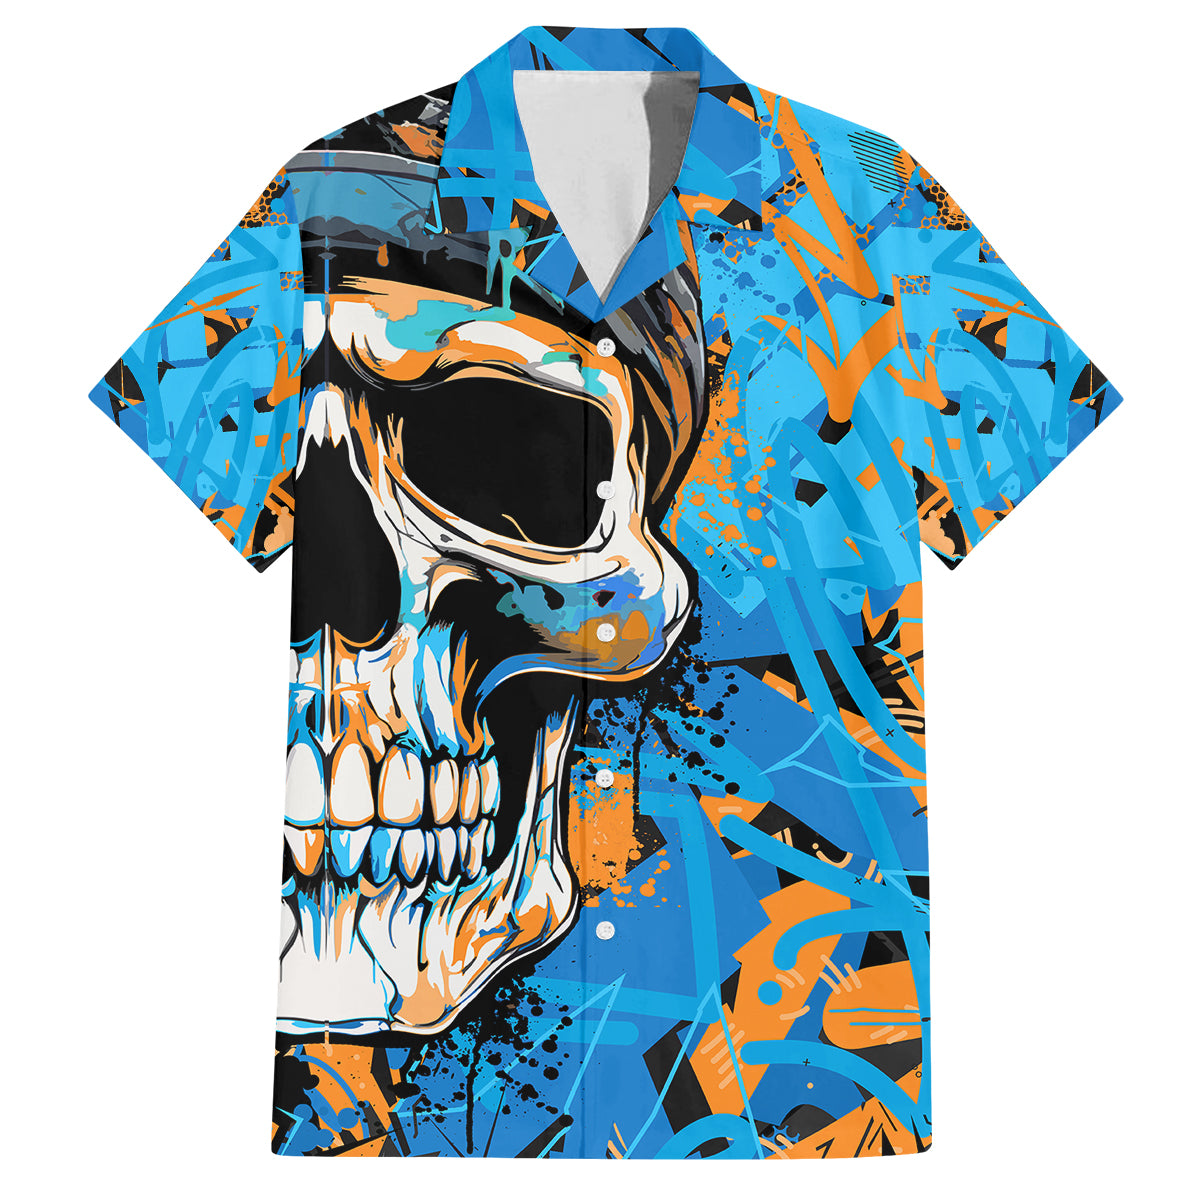 grafity-skull-kid-hawaiian-shirt-street-style-skull-colorful-abstract-art